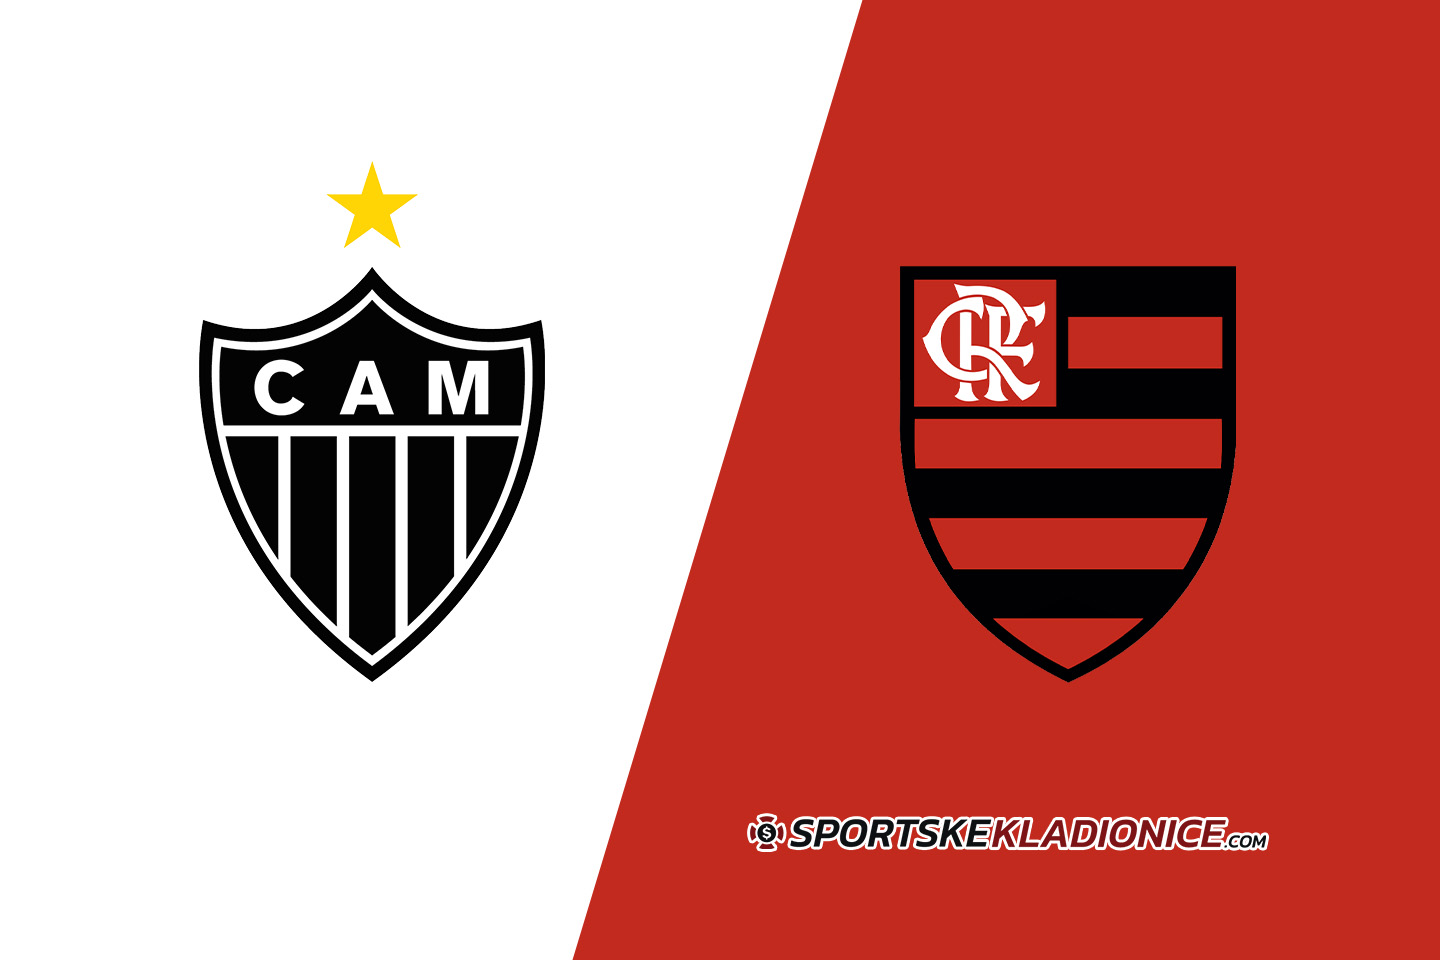 Atletico Mineiro vs Flamengo